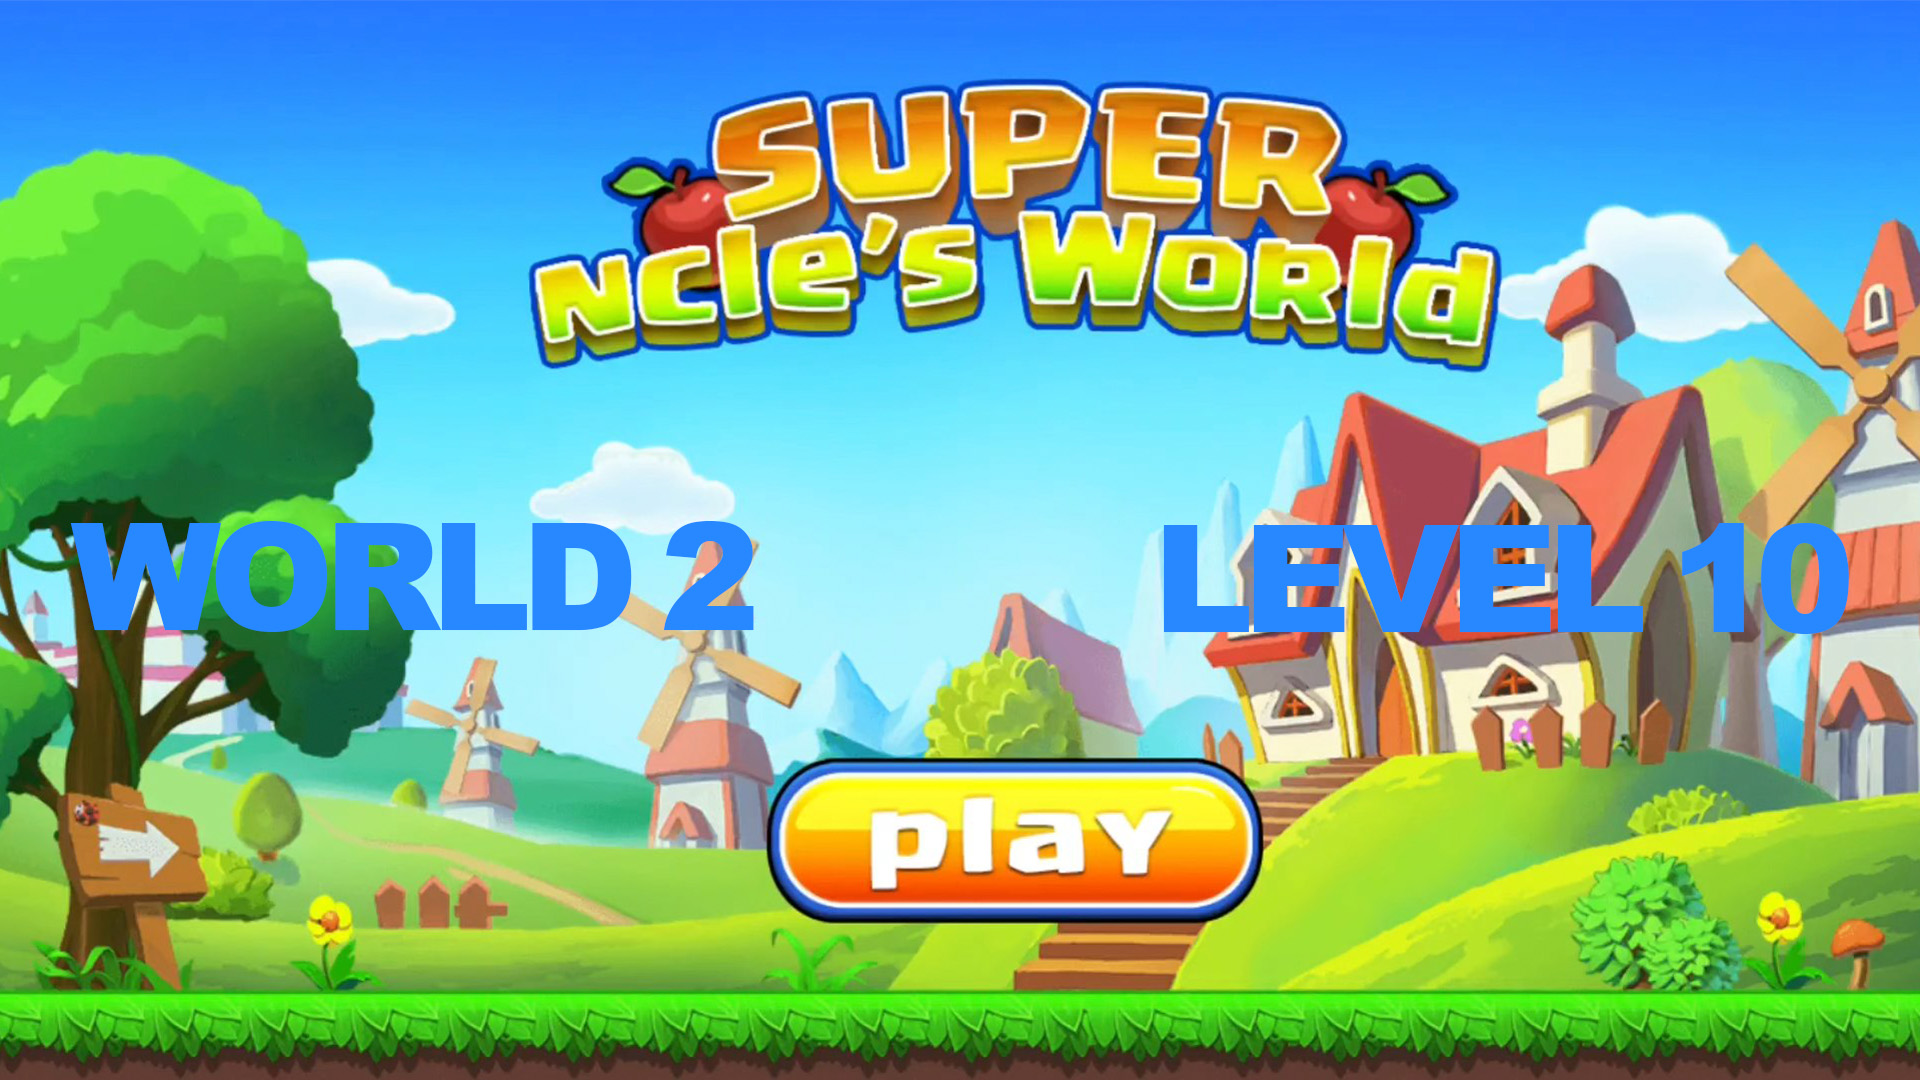 Super ncle's  World 2. level 10.